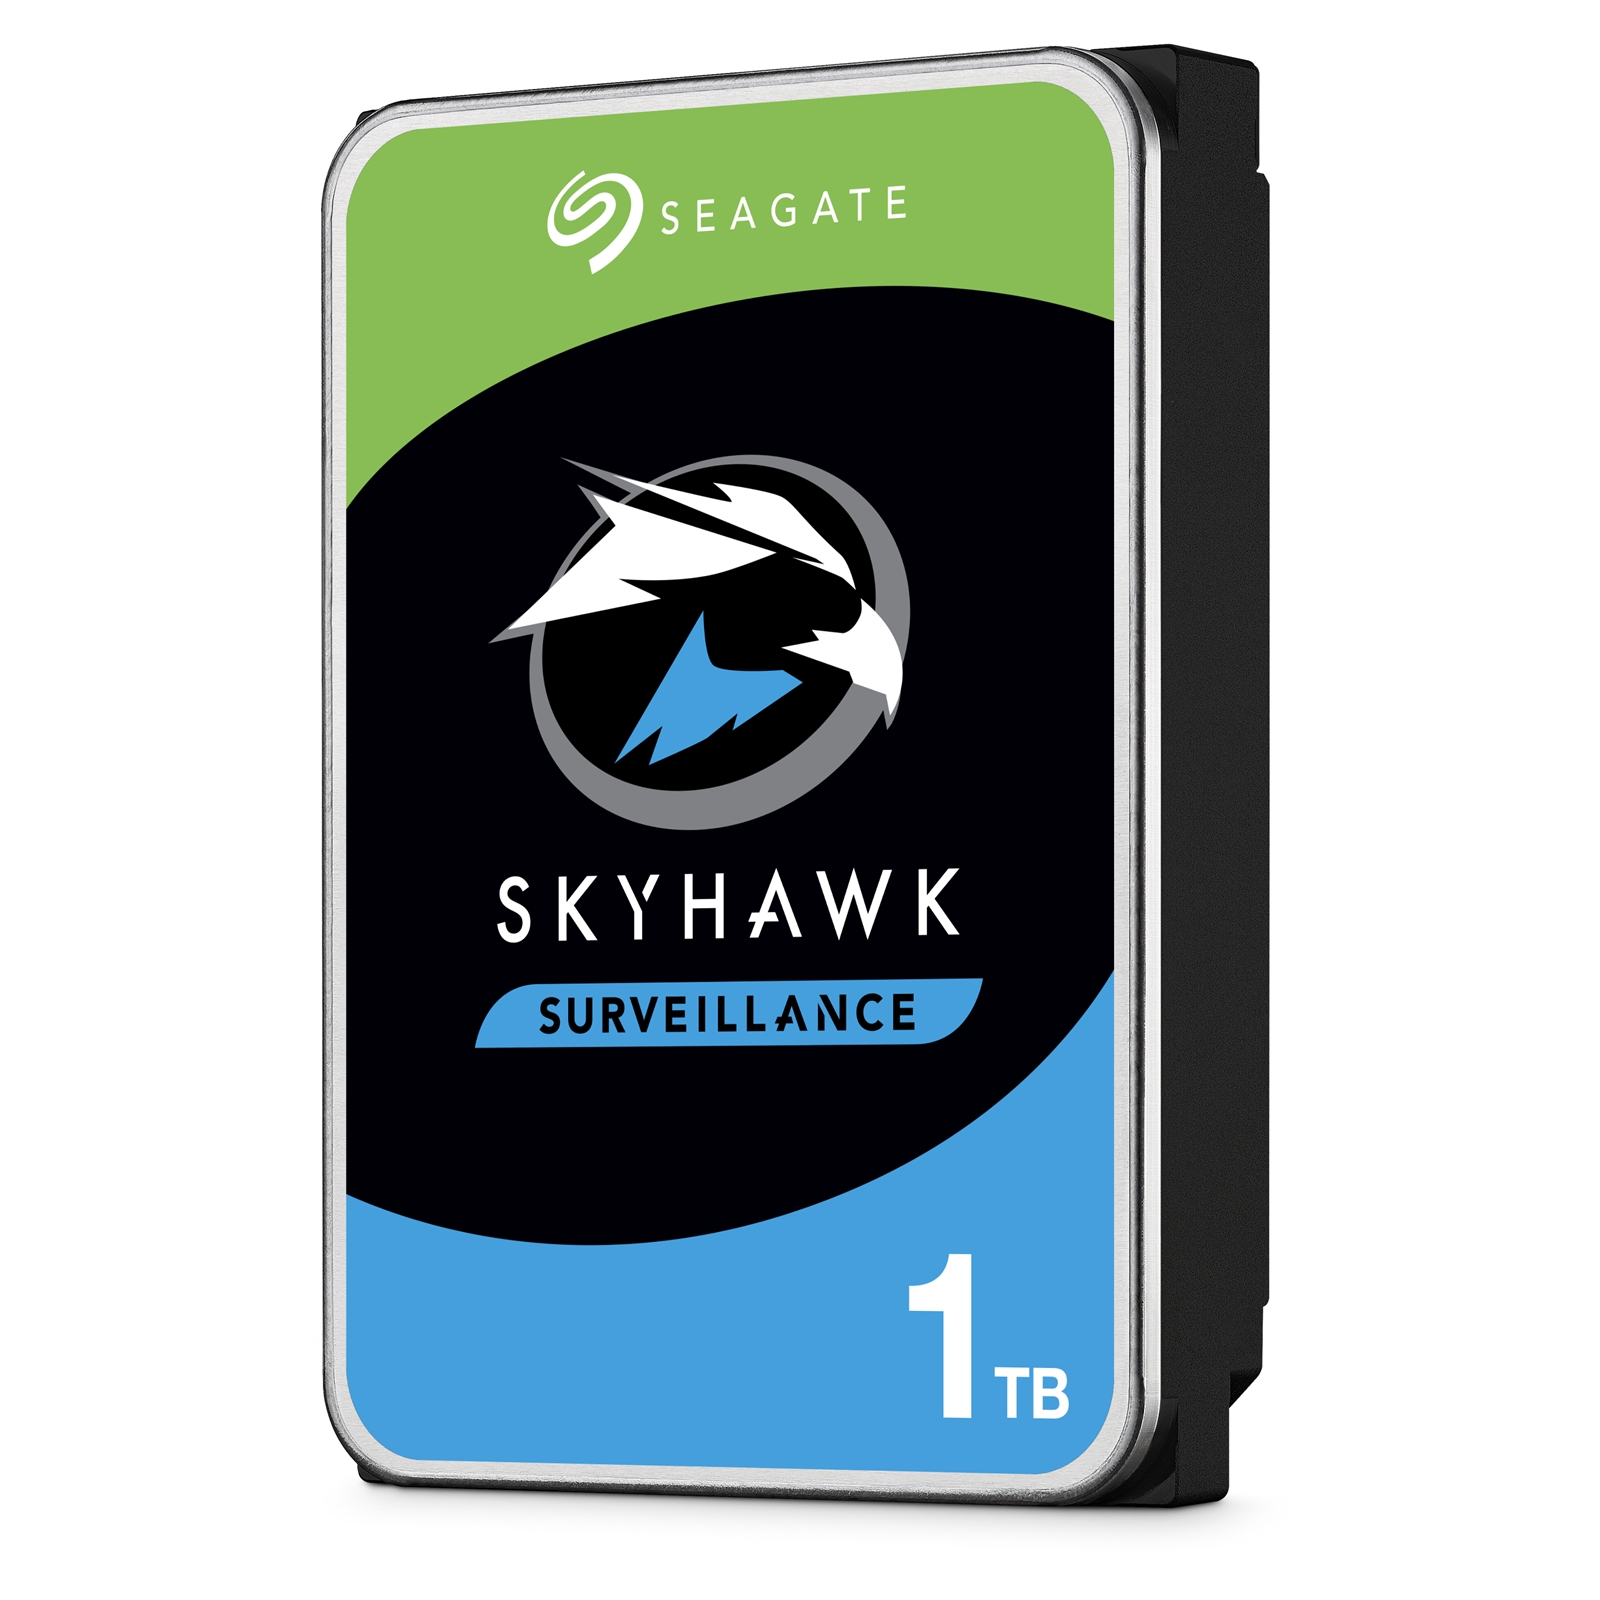 Seagate SkyHawk Surveillance ST1000VX005 1TB 3.5" 5900RPM 64MB Cache SATA III Internal Hard Drive